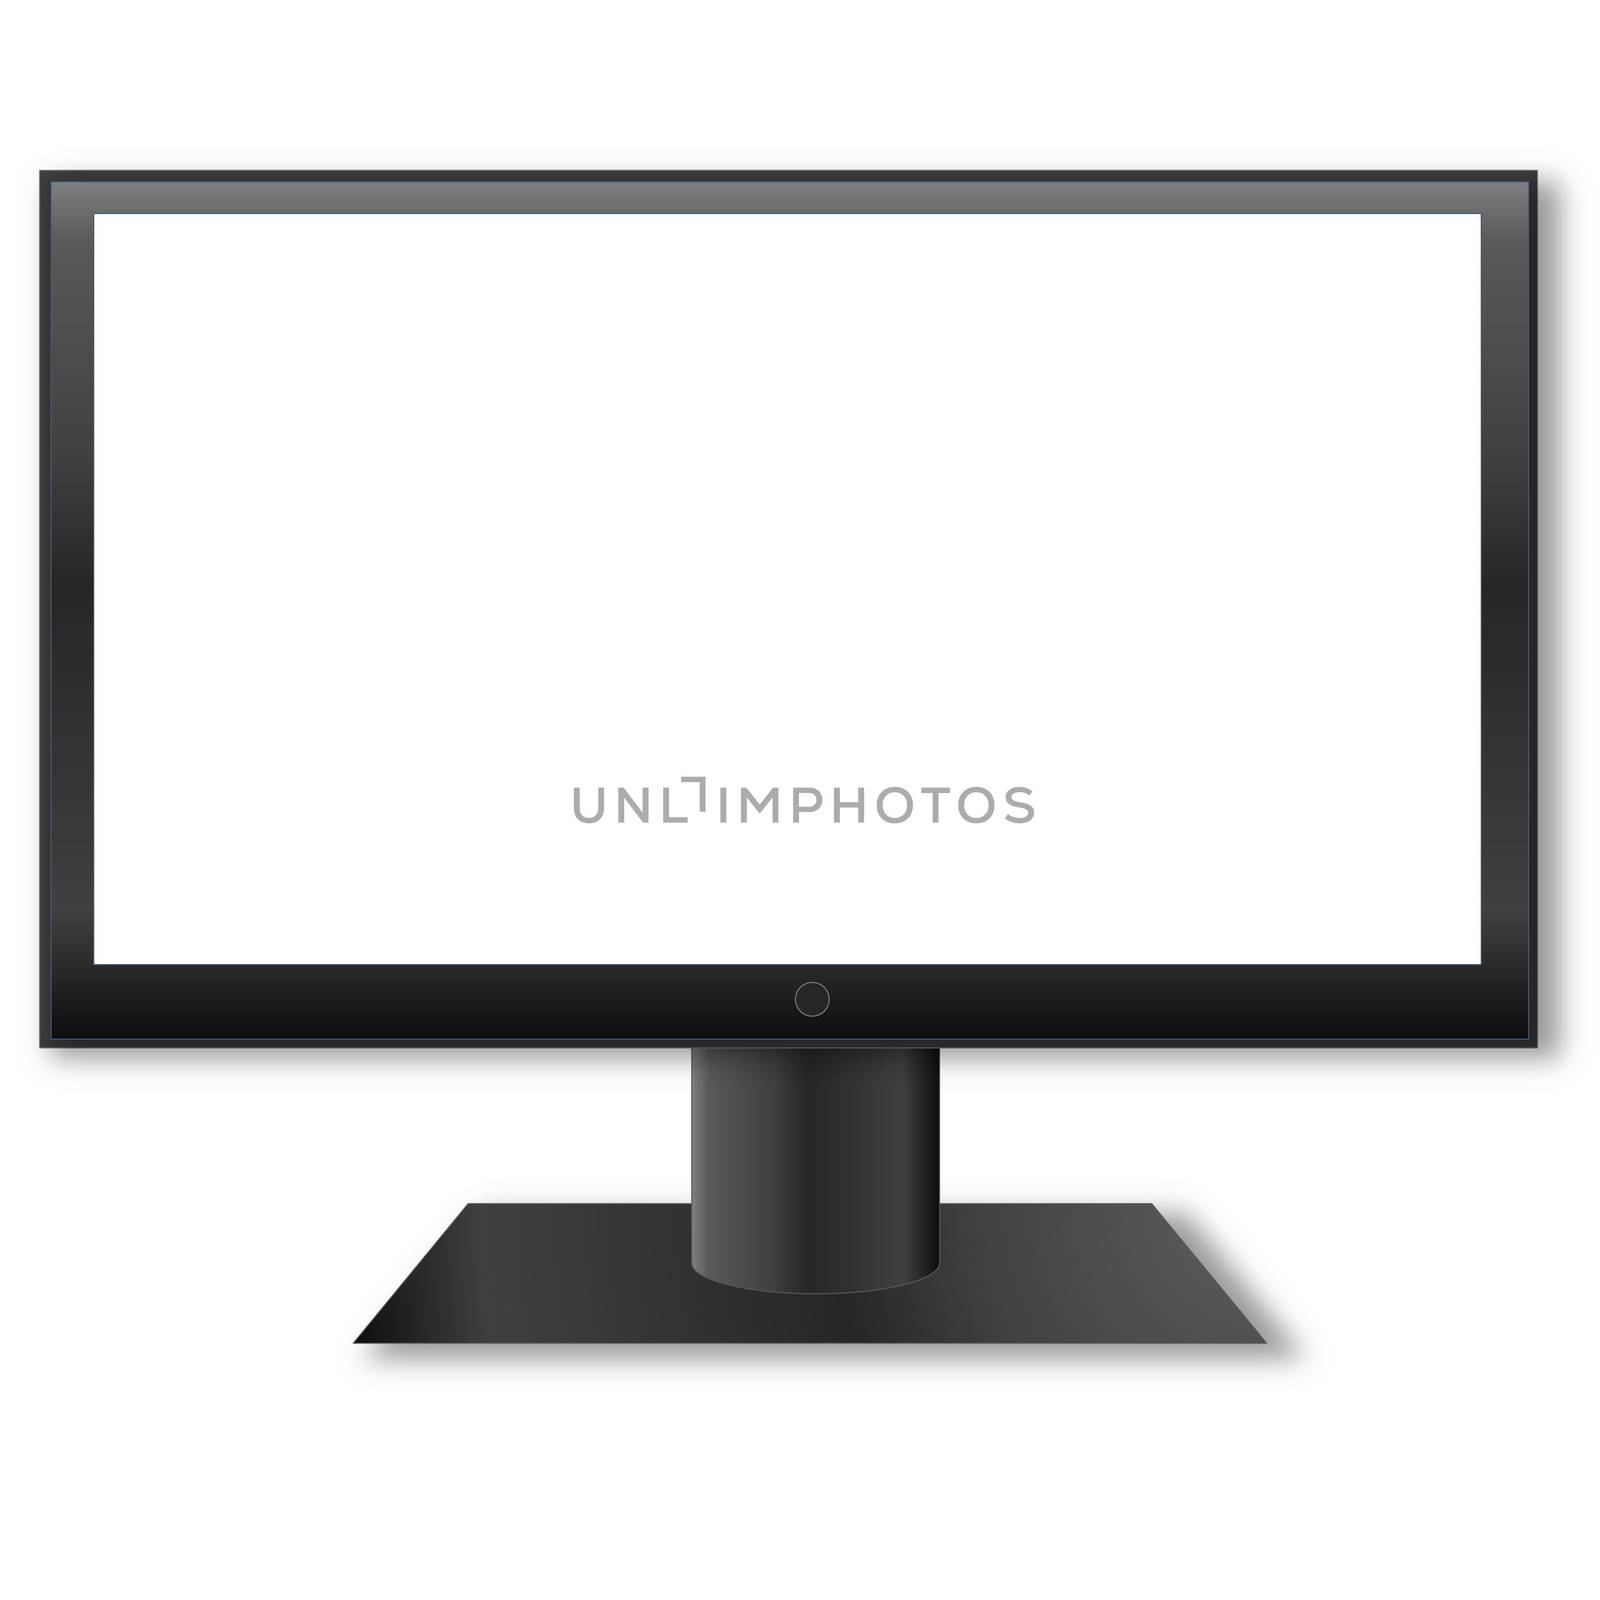 Black metallic computer screen in white background